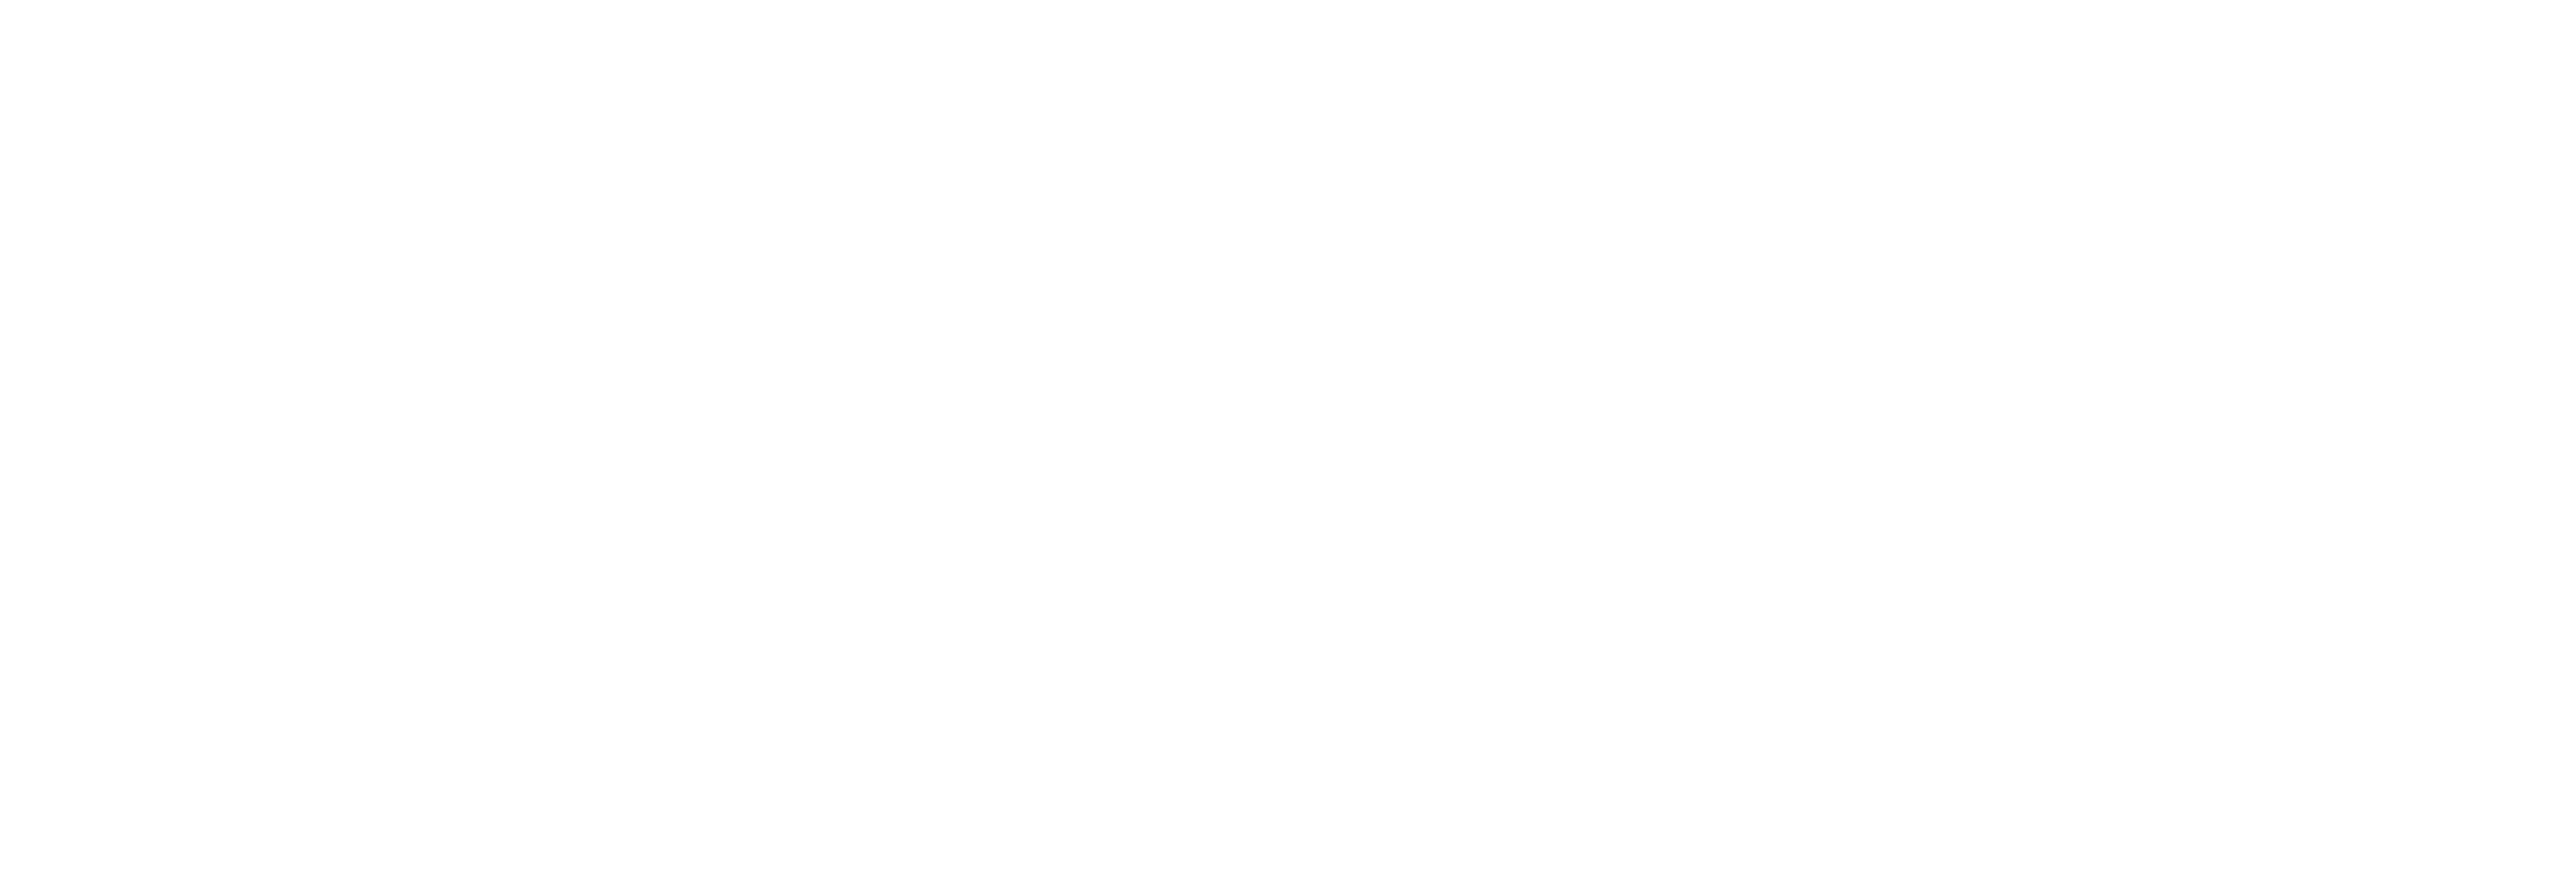 Ashoka final logo landscape white-01